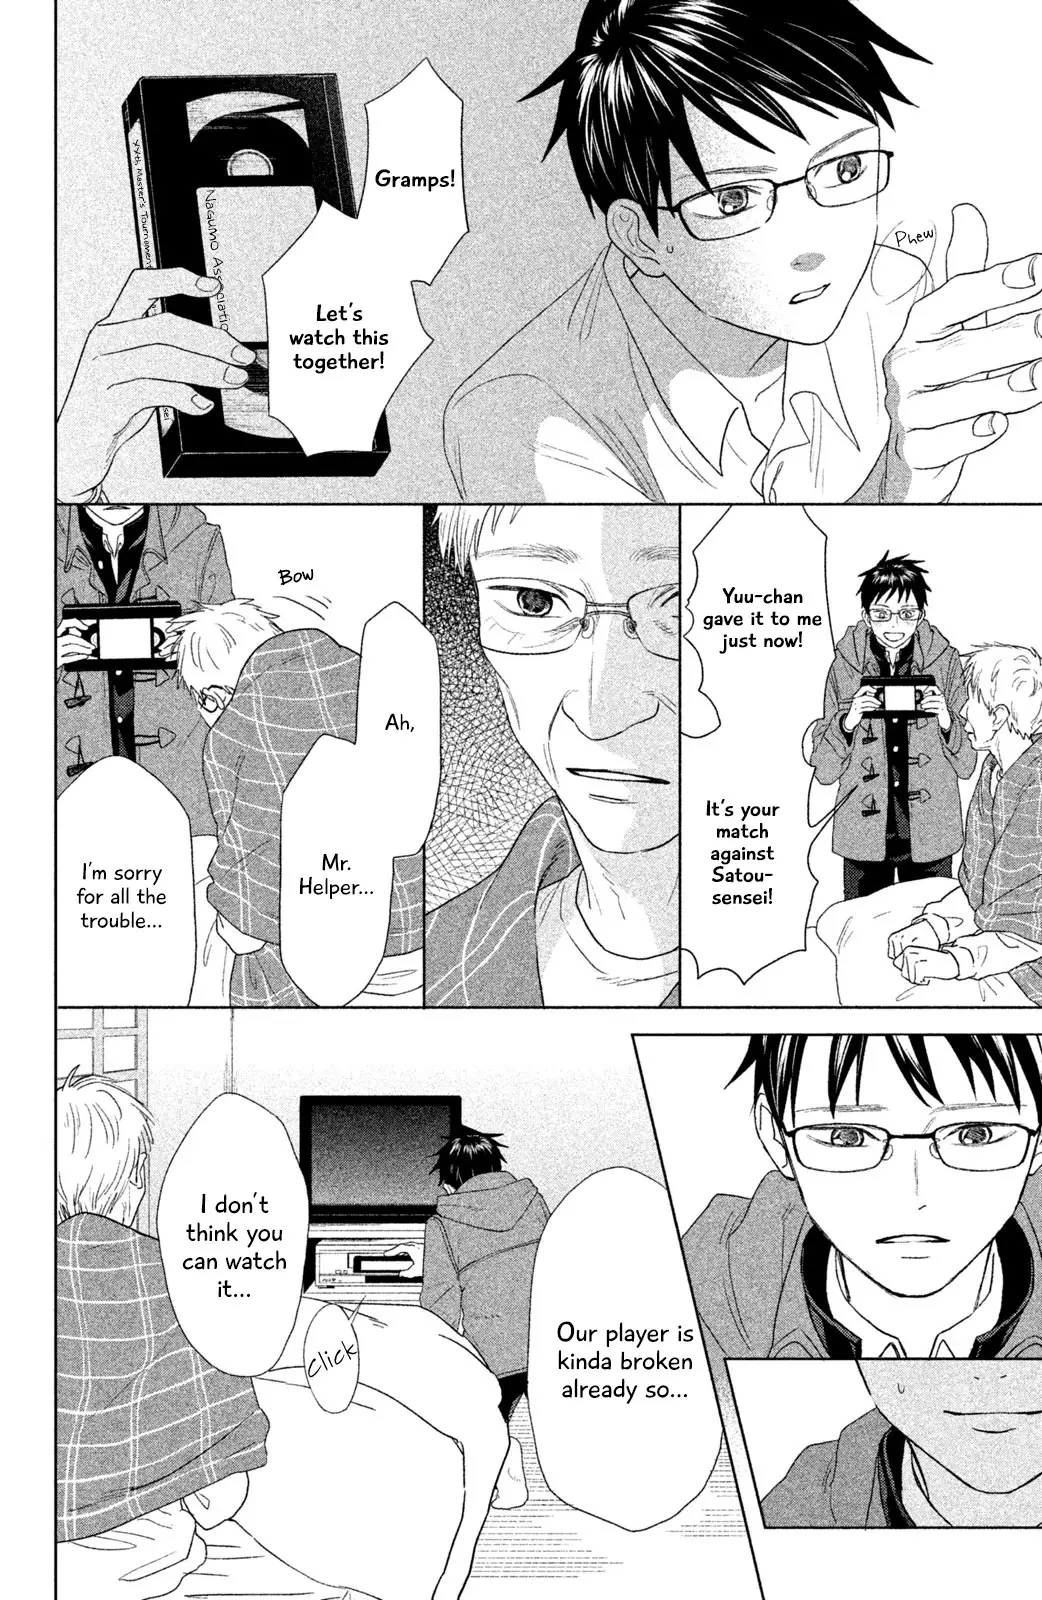 Chihayafuru: Middle School Arc - 9 page 5